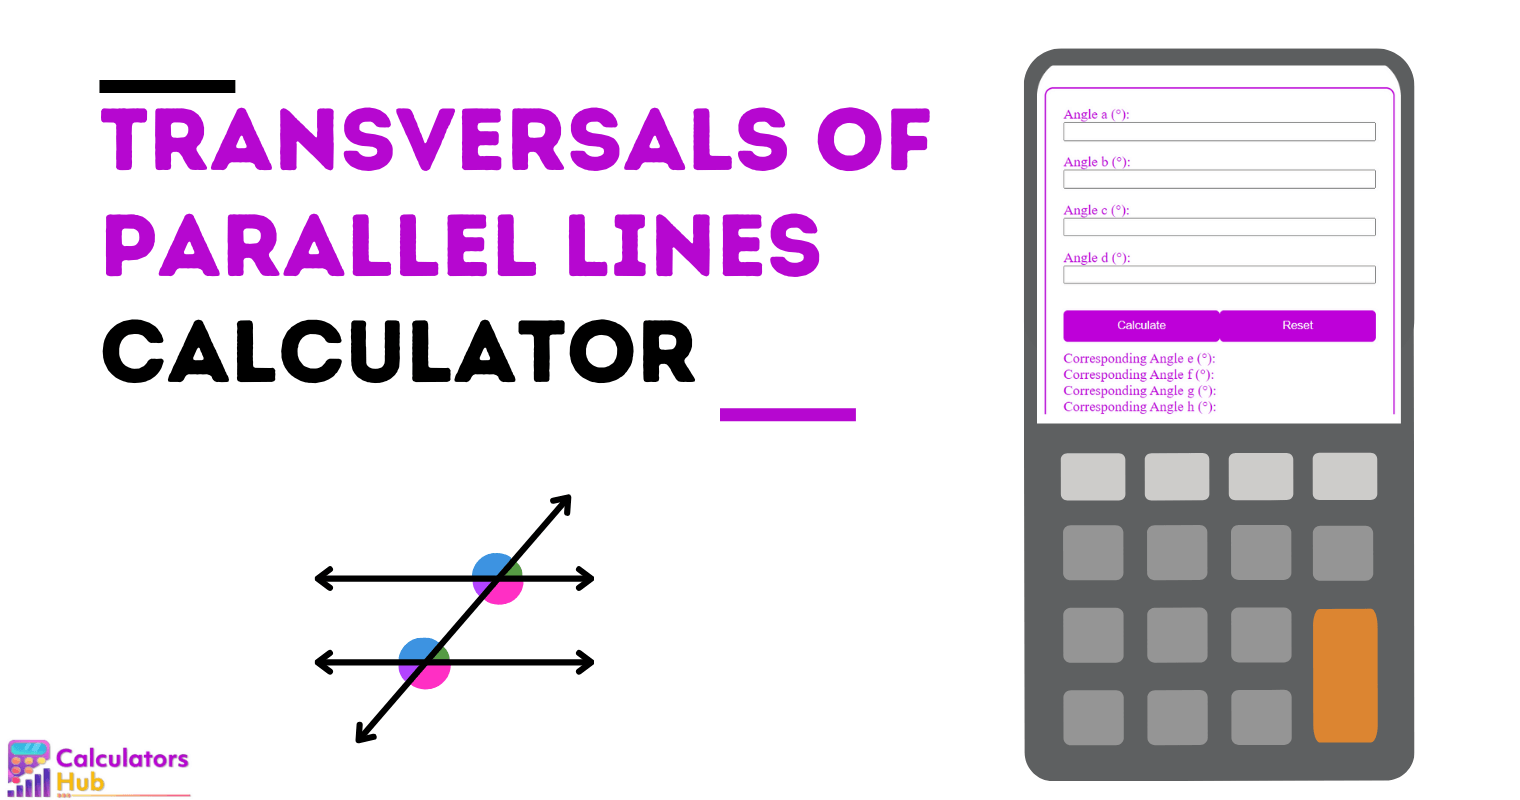 Transversals of Parallel Lines Calculator